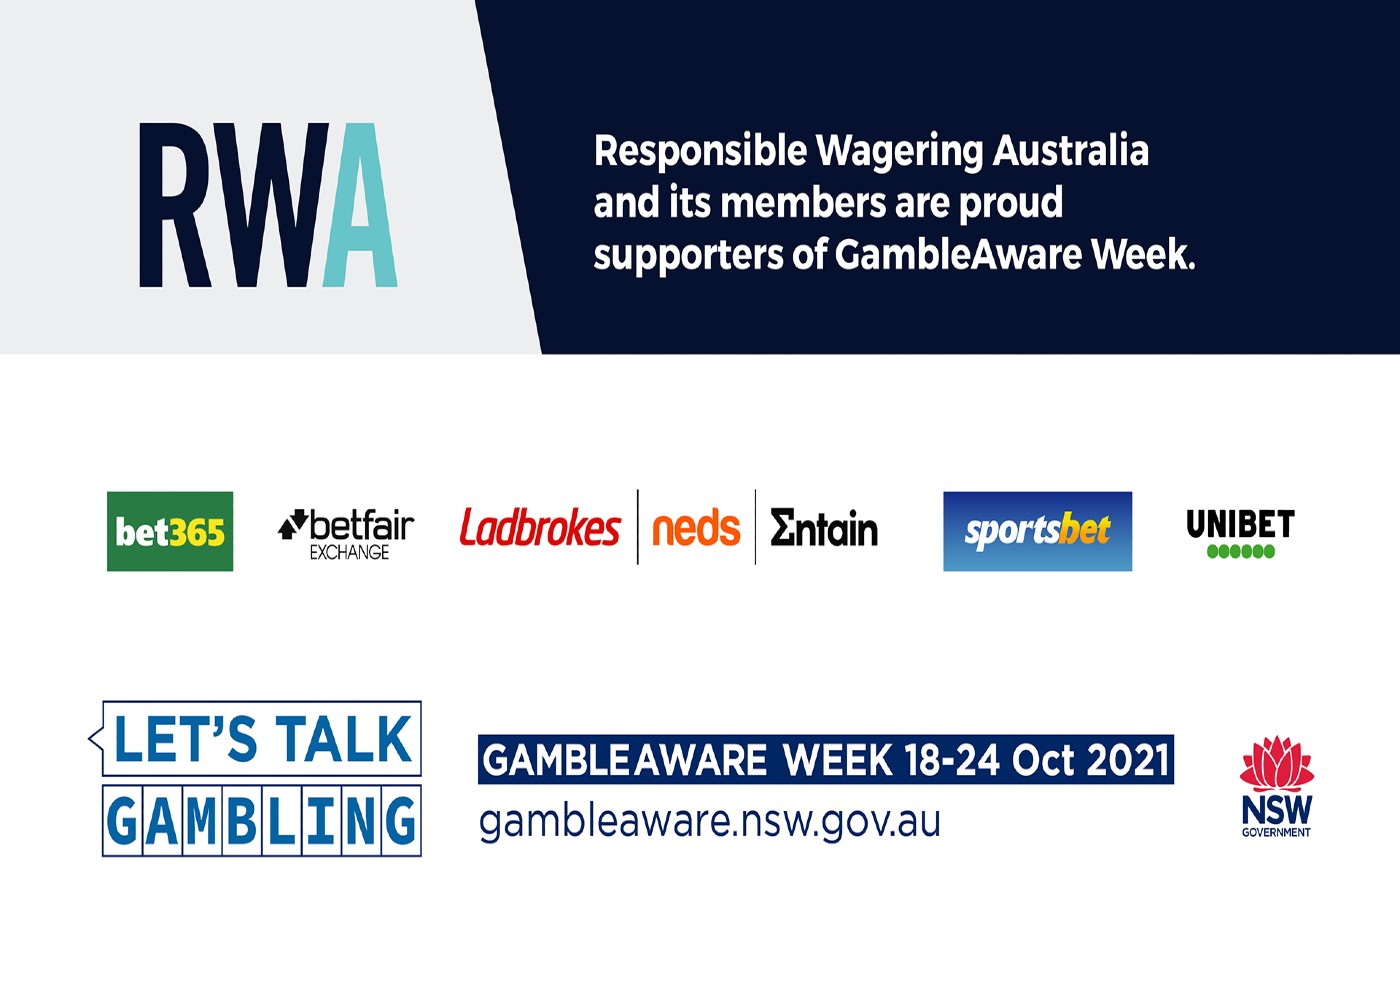 Responsible Wagering Australia supports GambleAware Week 2021